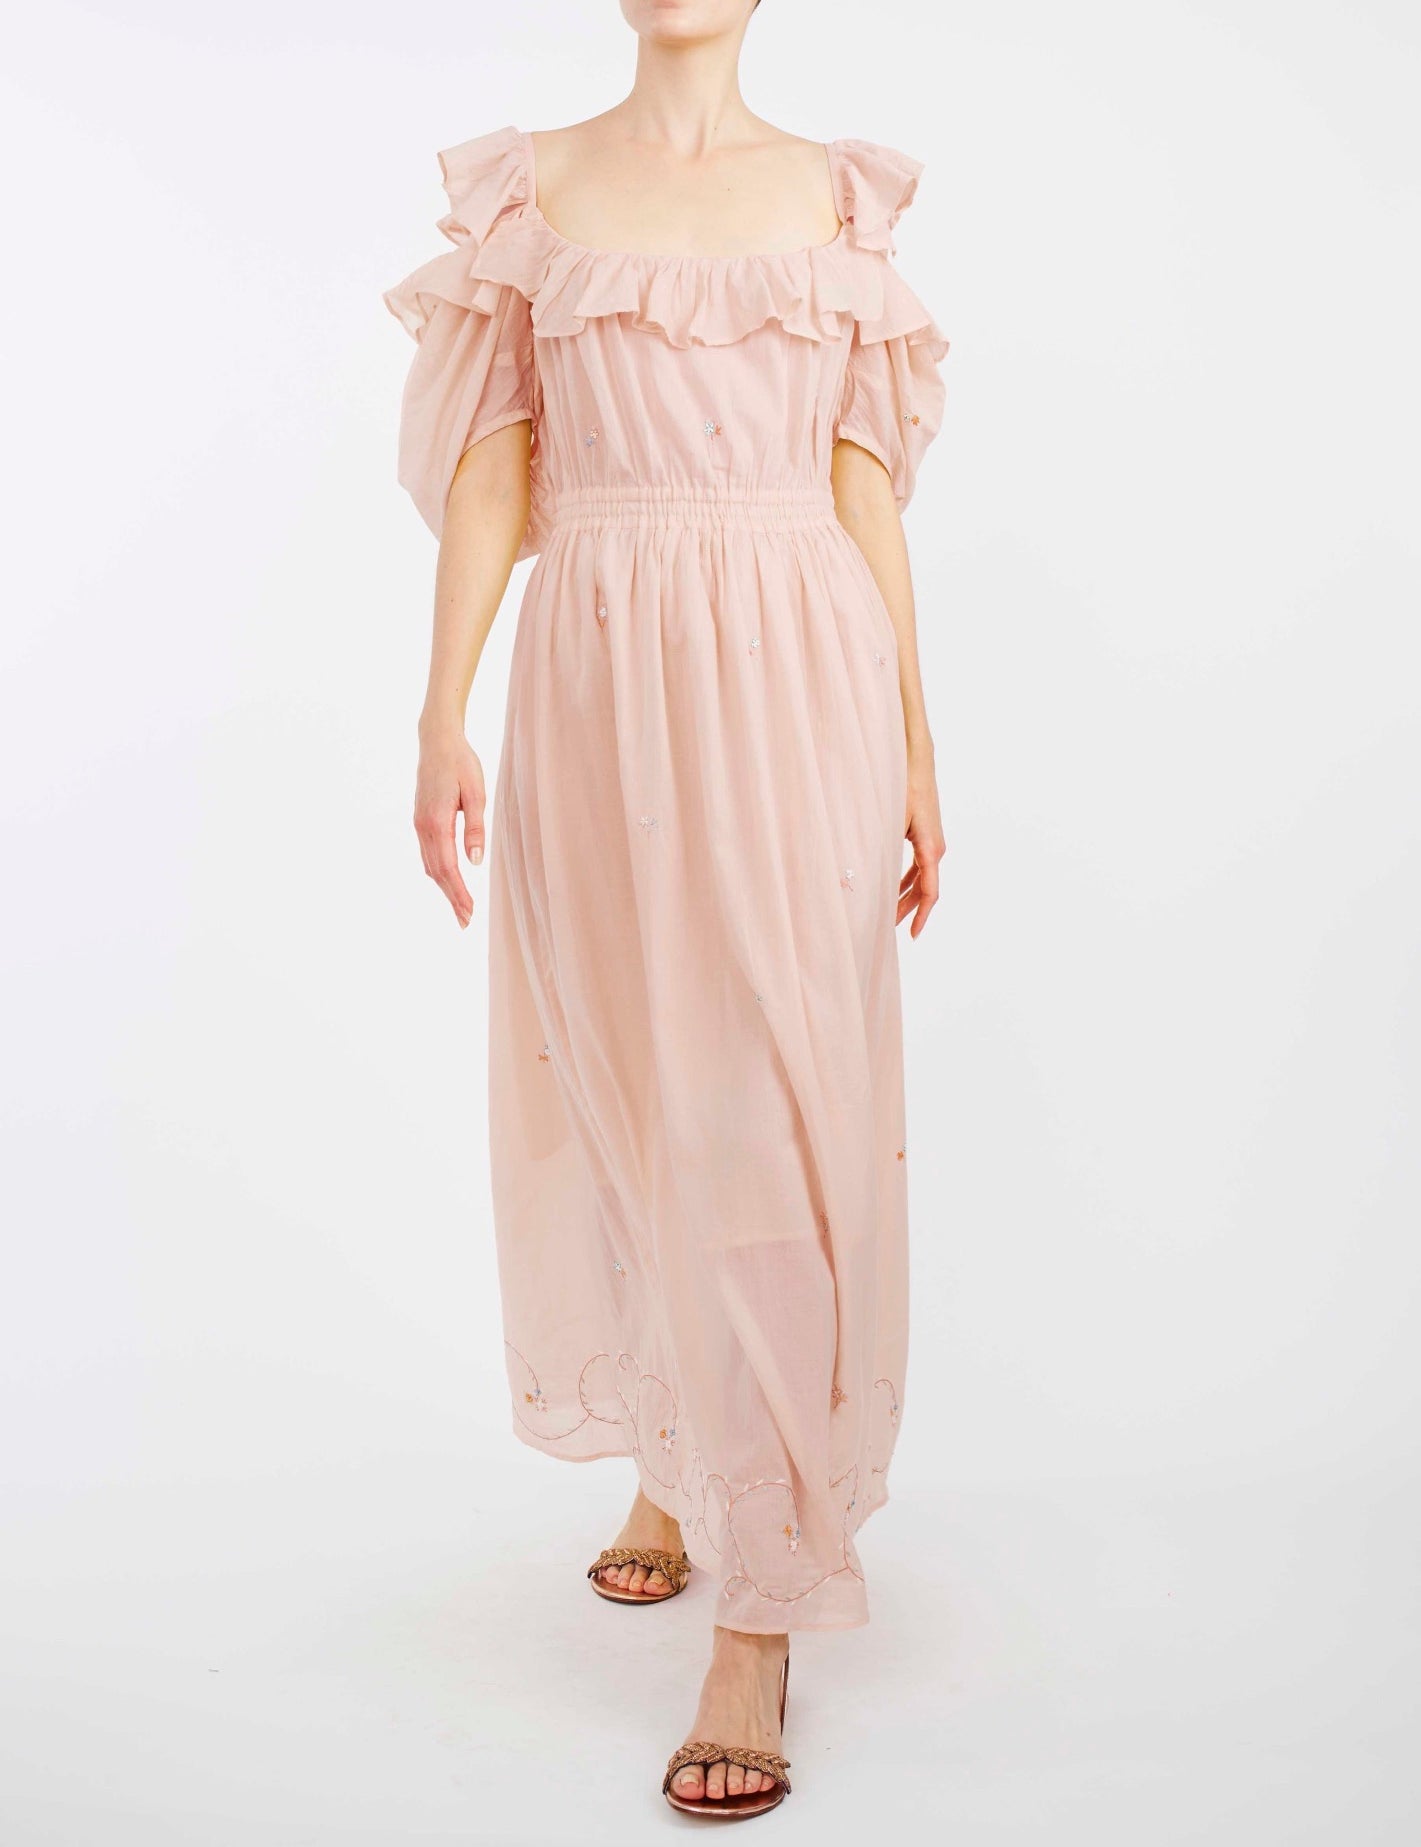 Venus Boudoir Carmelite Pink Dress by Thierry Colson